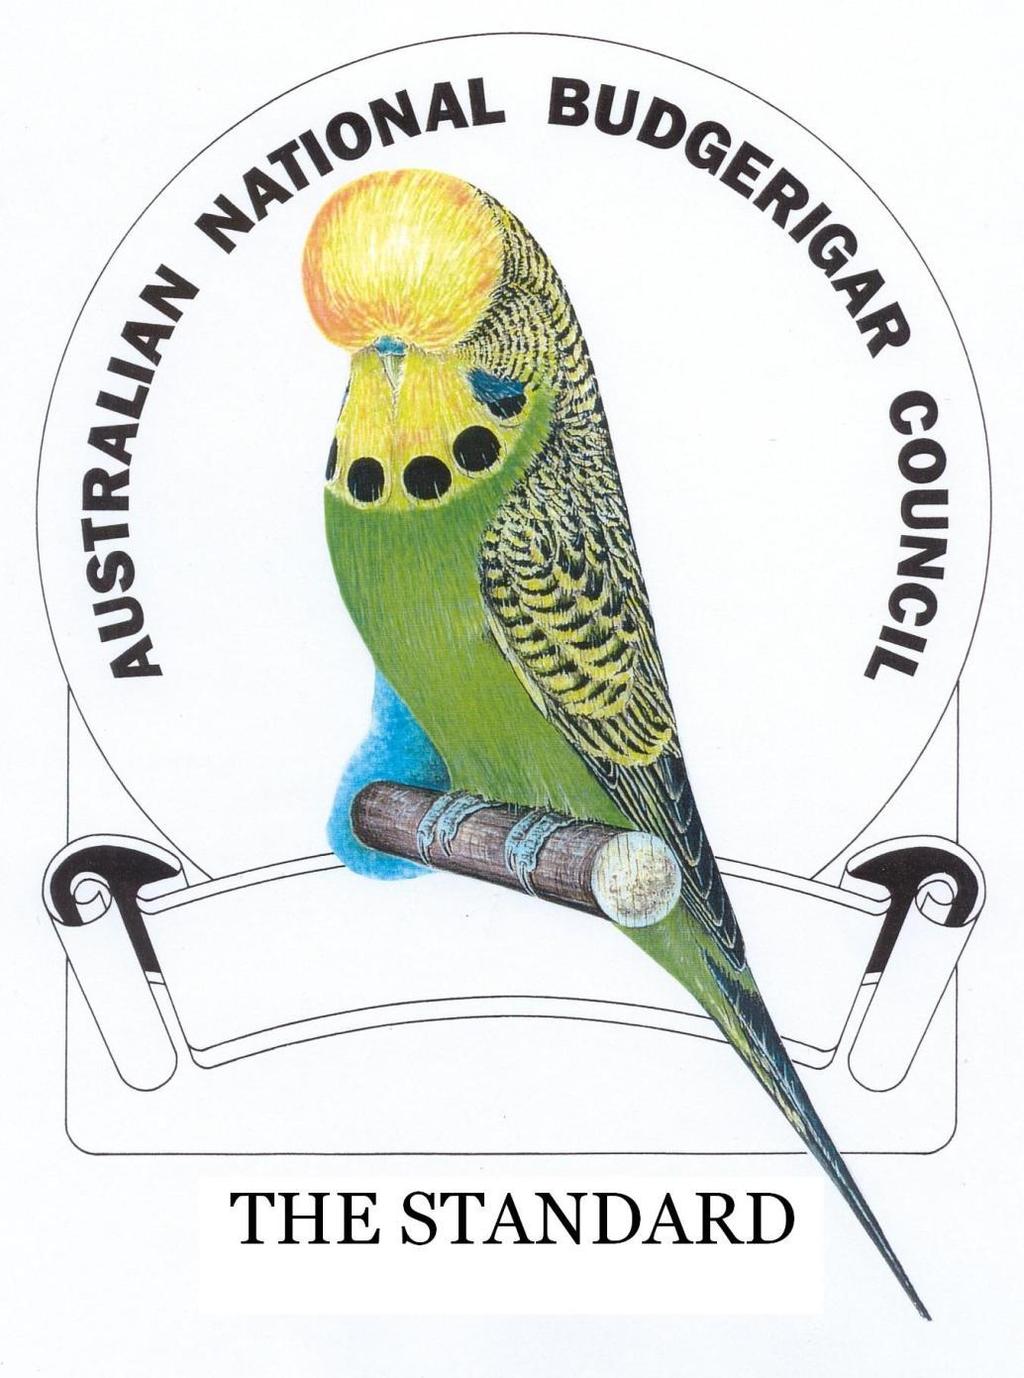 Australian National Budgerigar Council (ANBC)